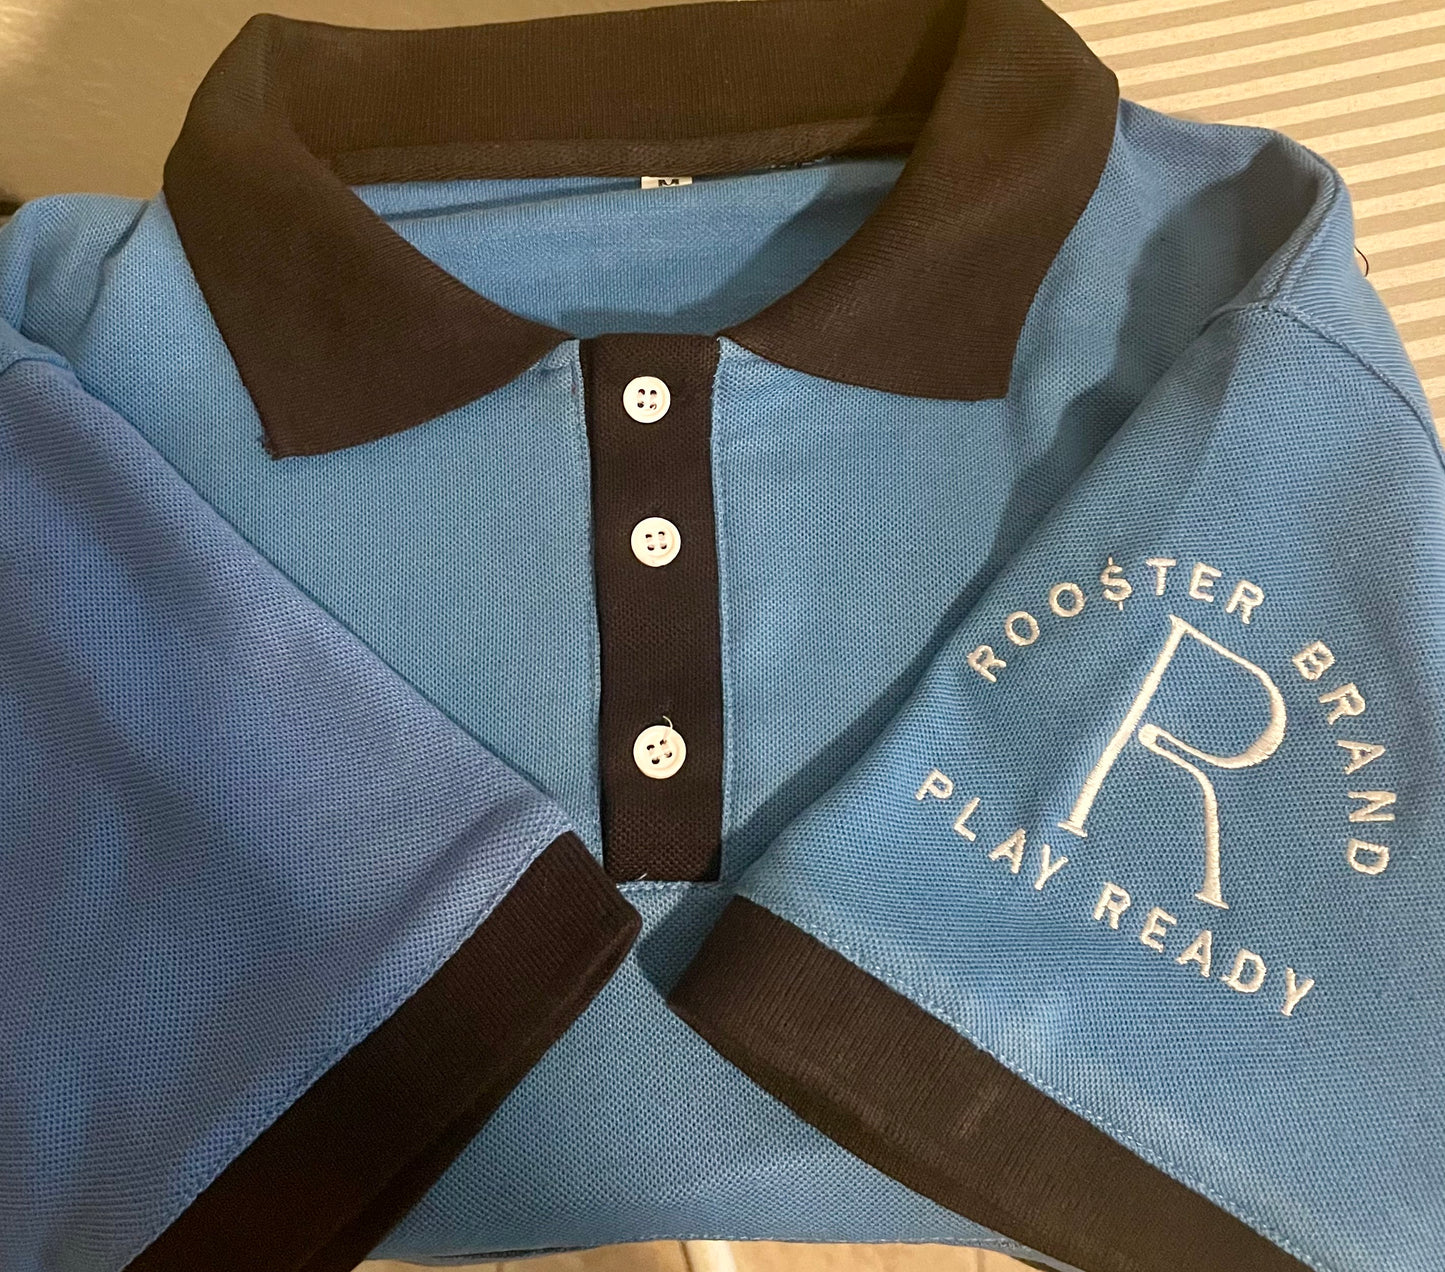 **PROMO** Just $12.99 Roo$ter Brand Custom Embroidered Logo Golf Polo Blue/Black Sleeve Logo